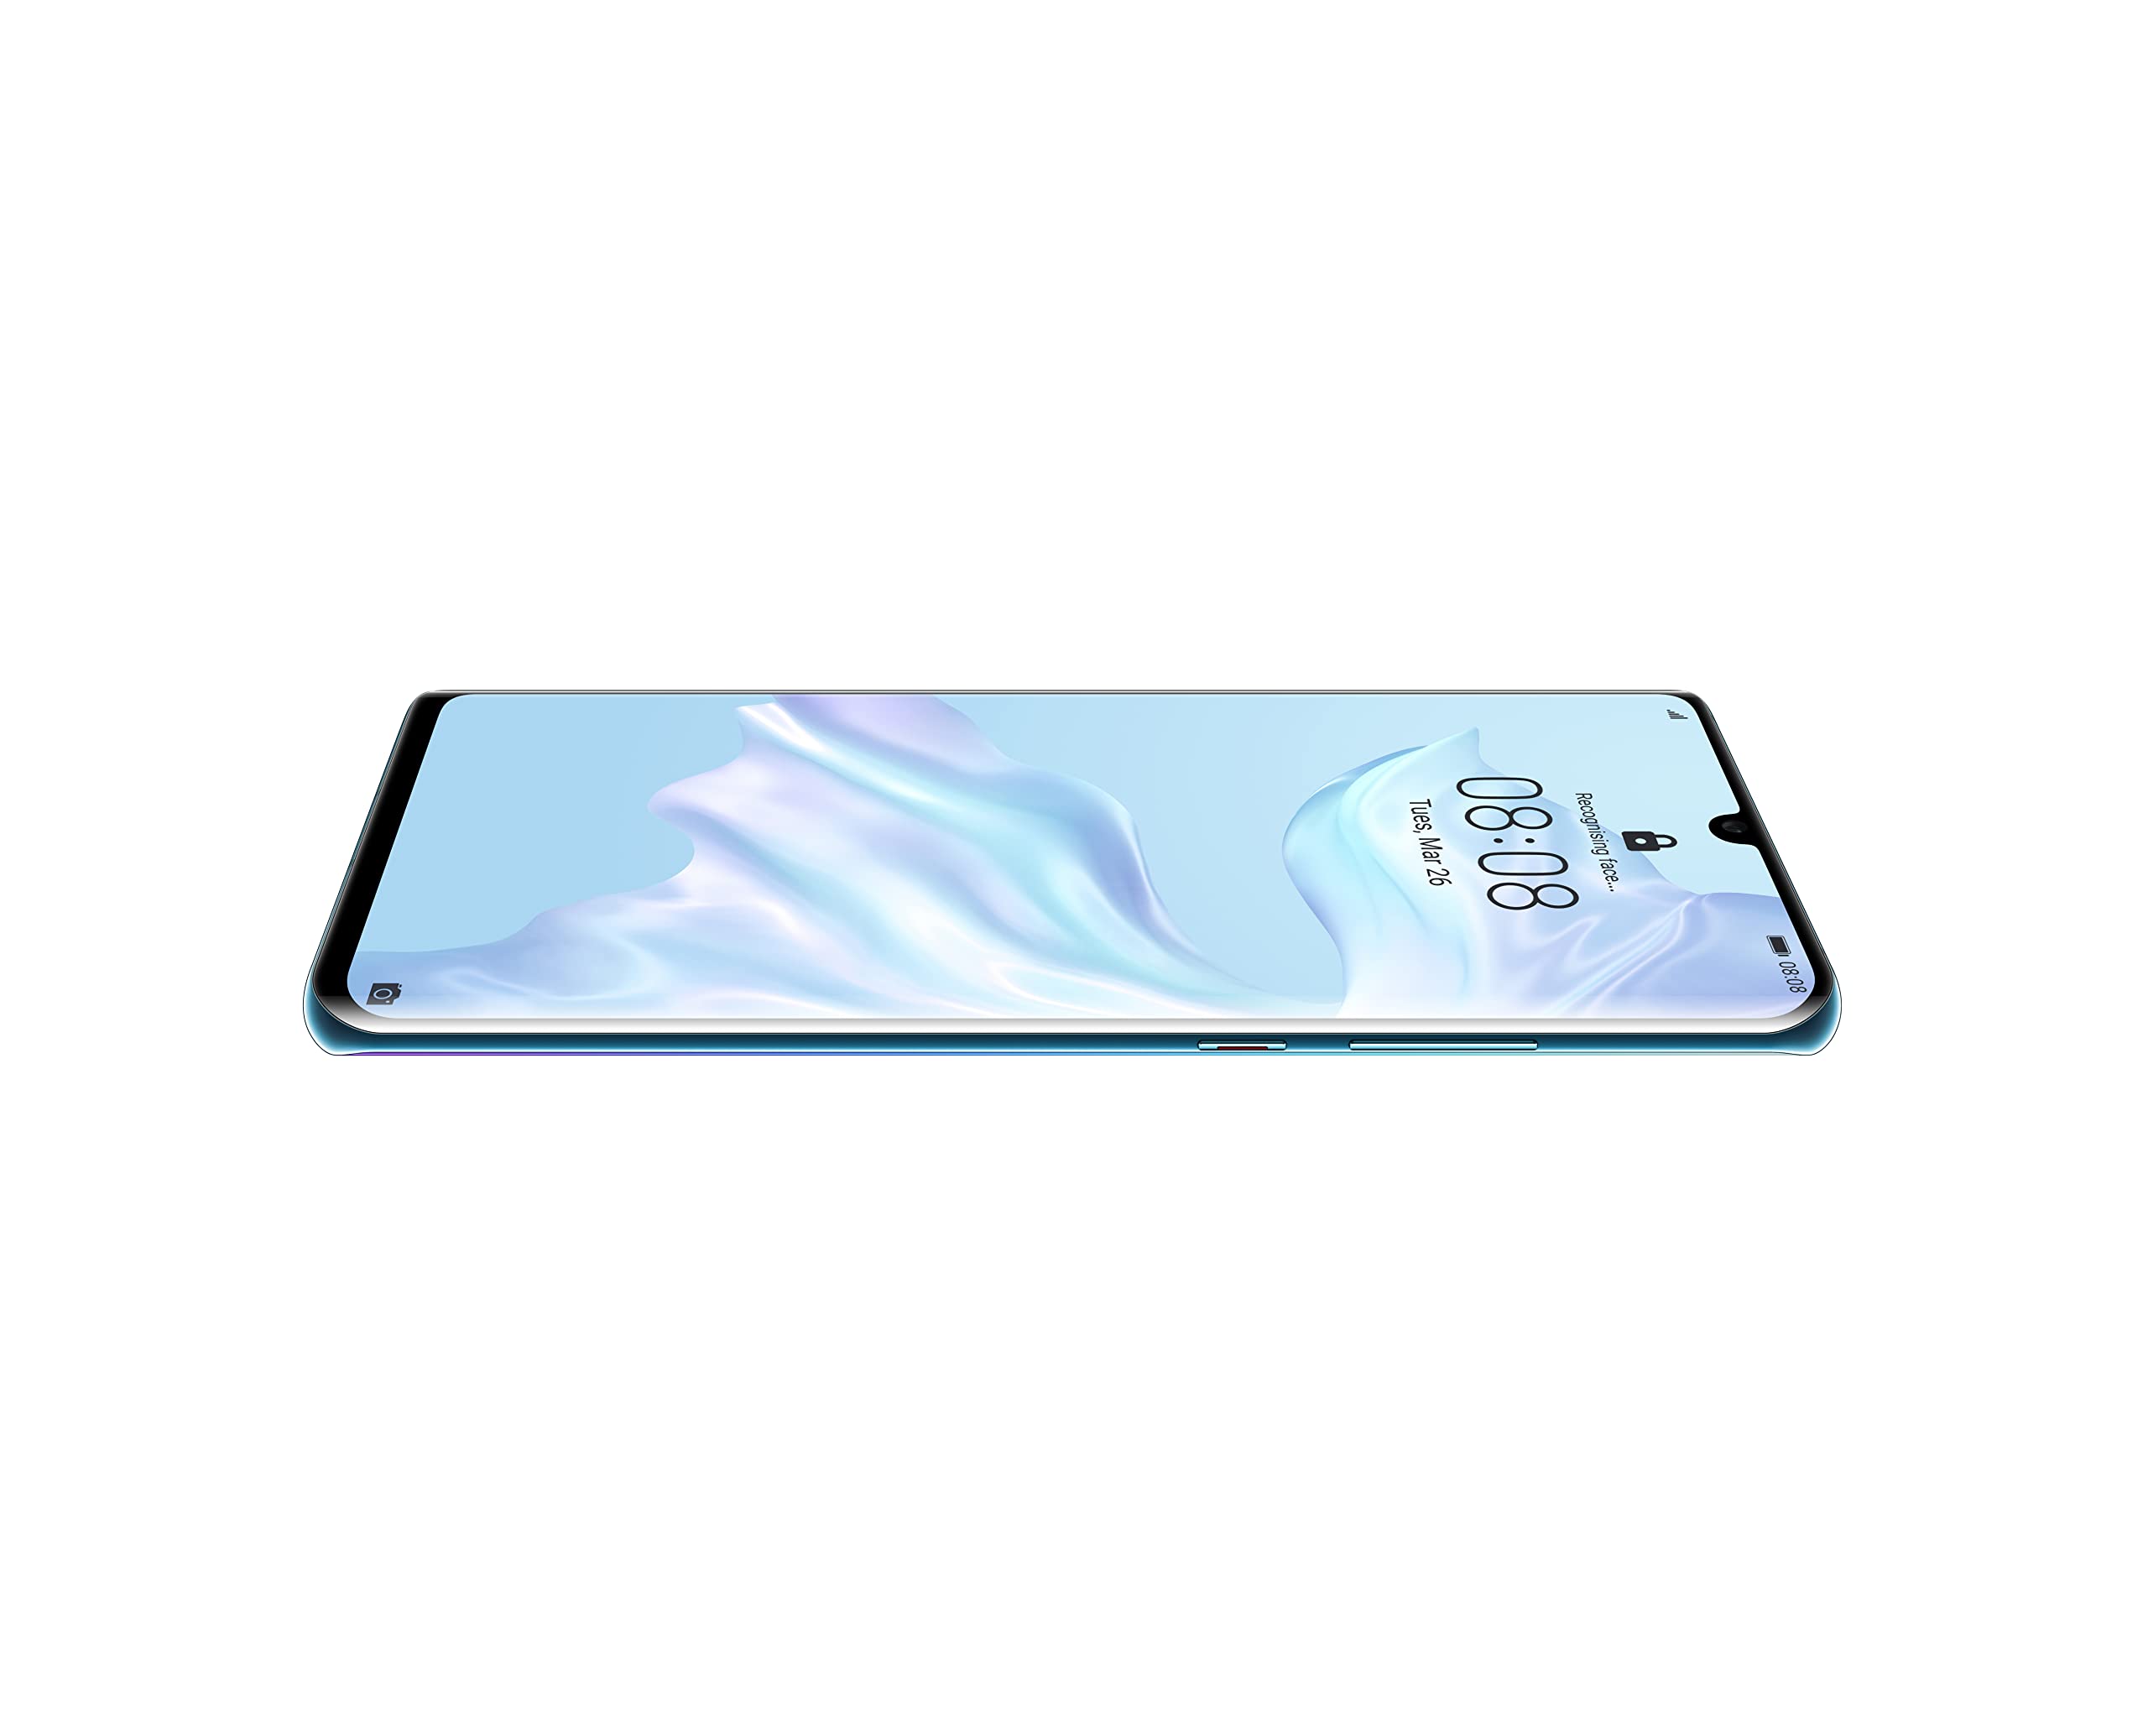 Huawei P30 Pro Dual/Hybrid-SIM 128GB 4G/LTE Smartphone (Breathing Crystal)